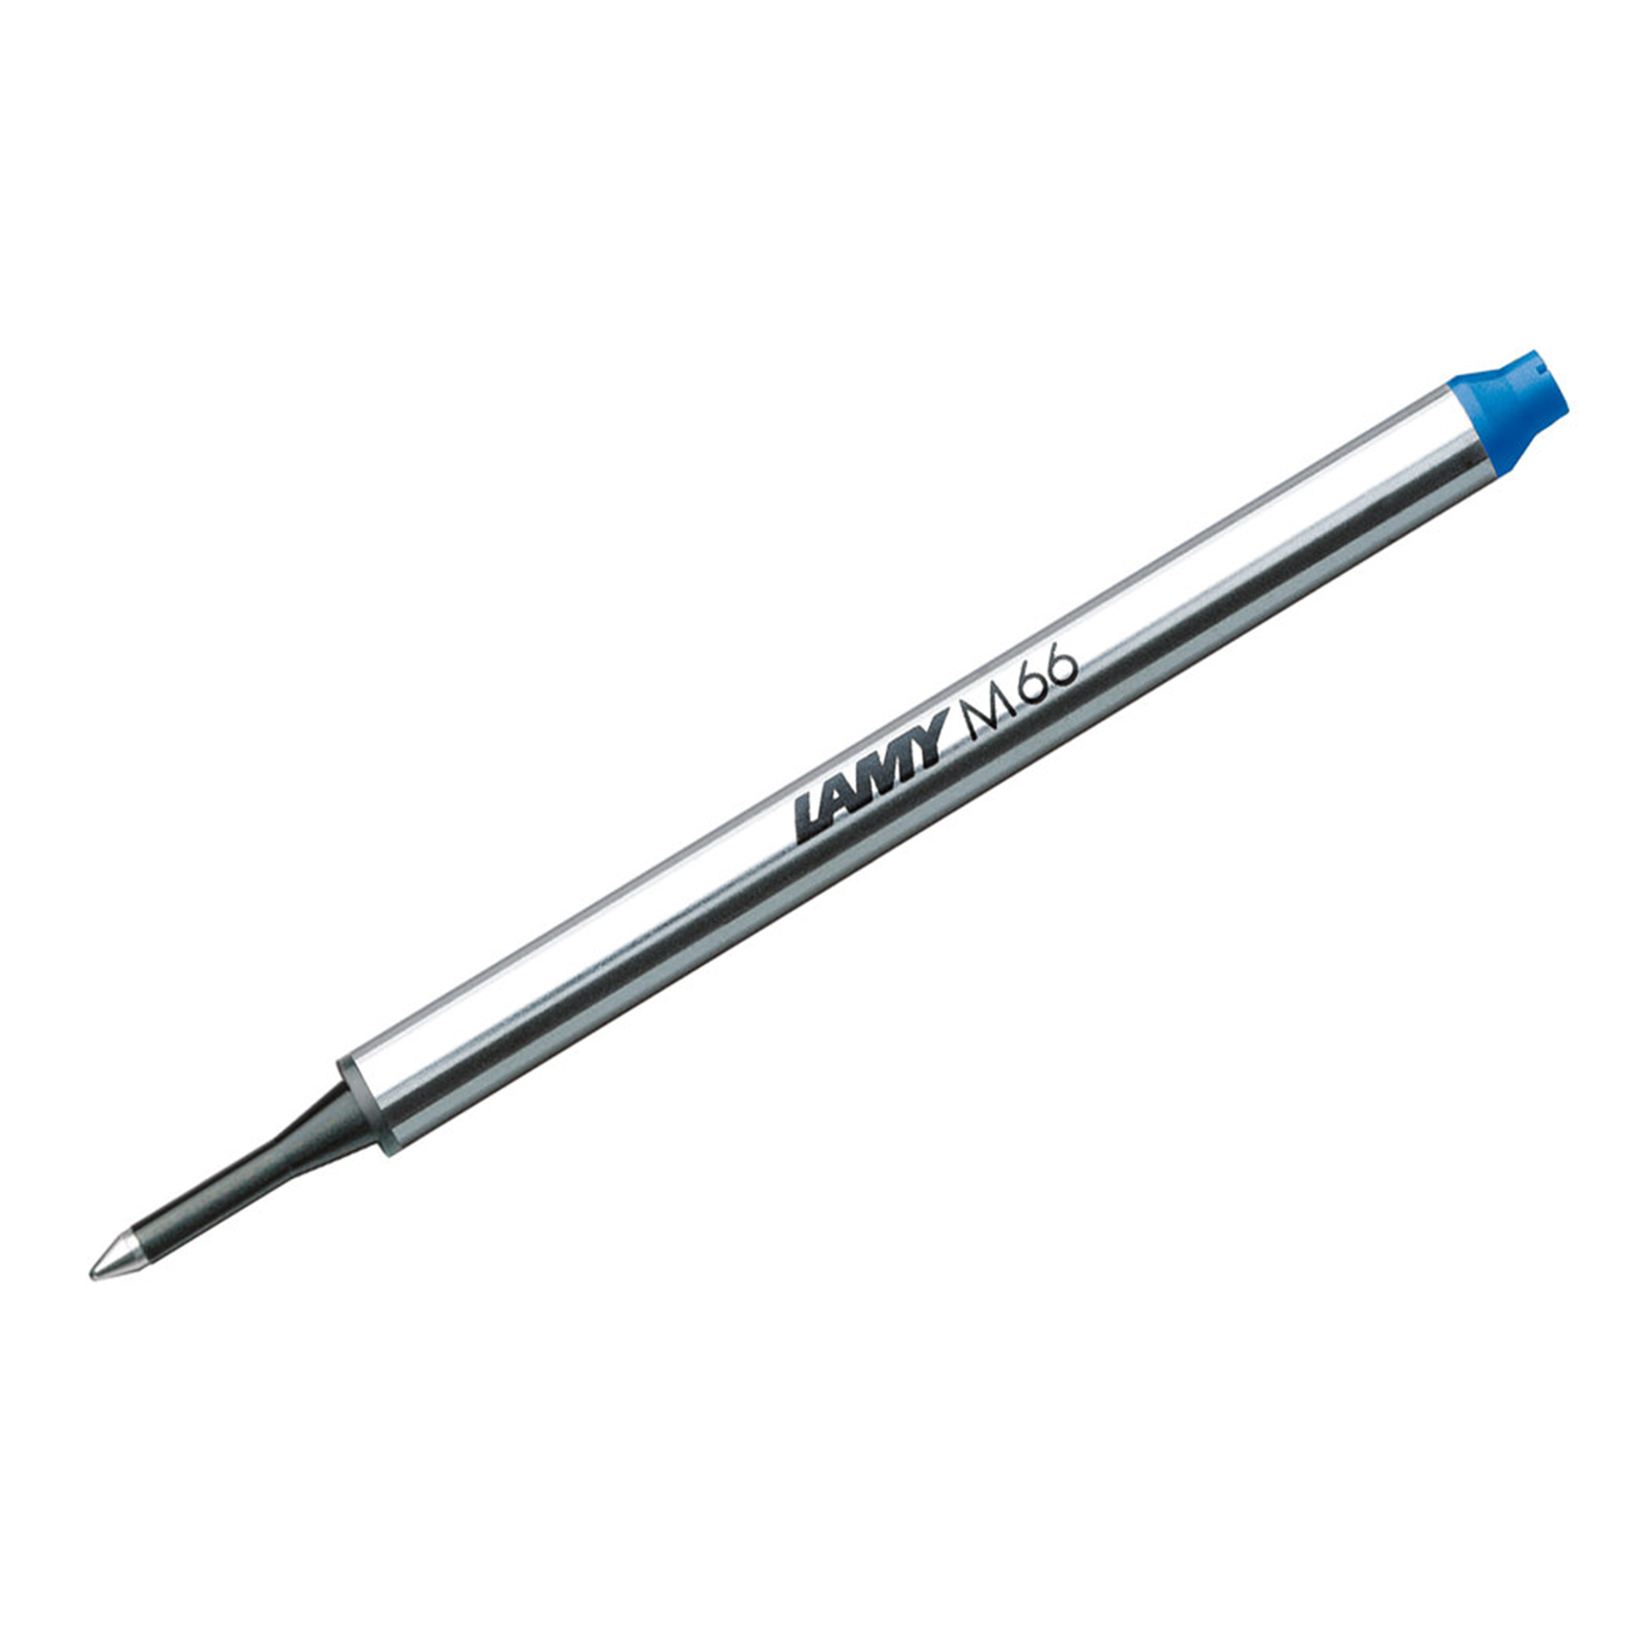 LAMY M66 Rollerball Pen Refill, Blue